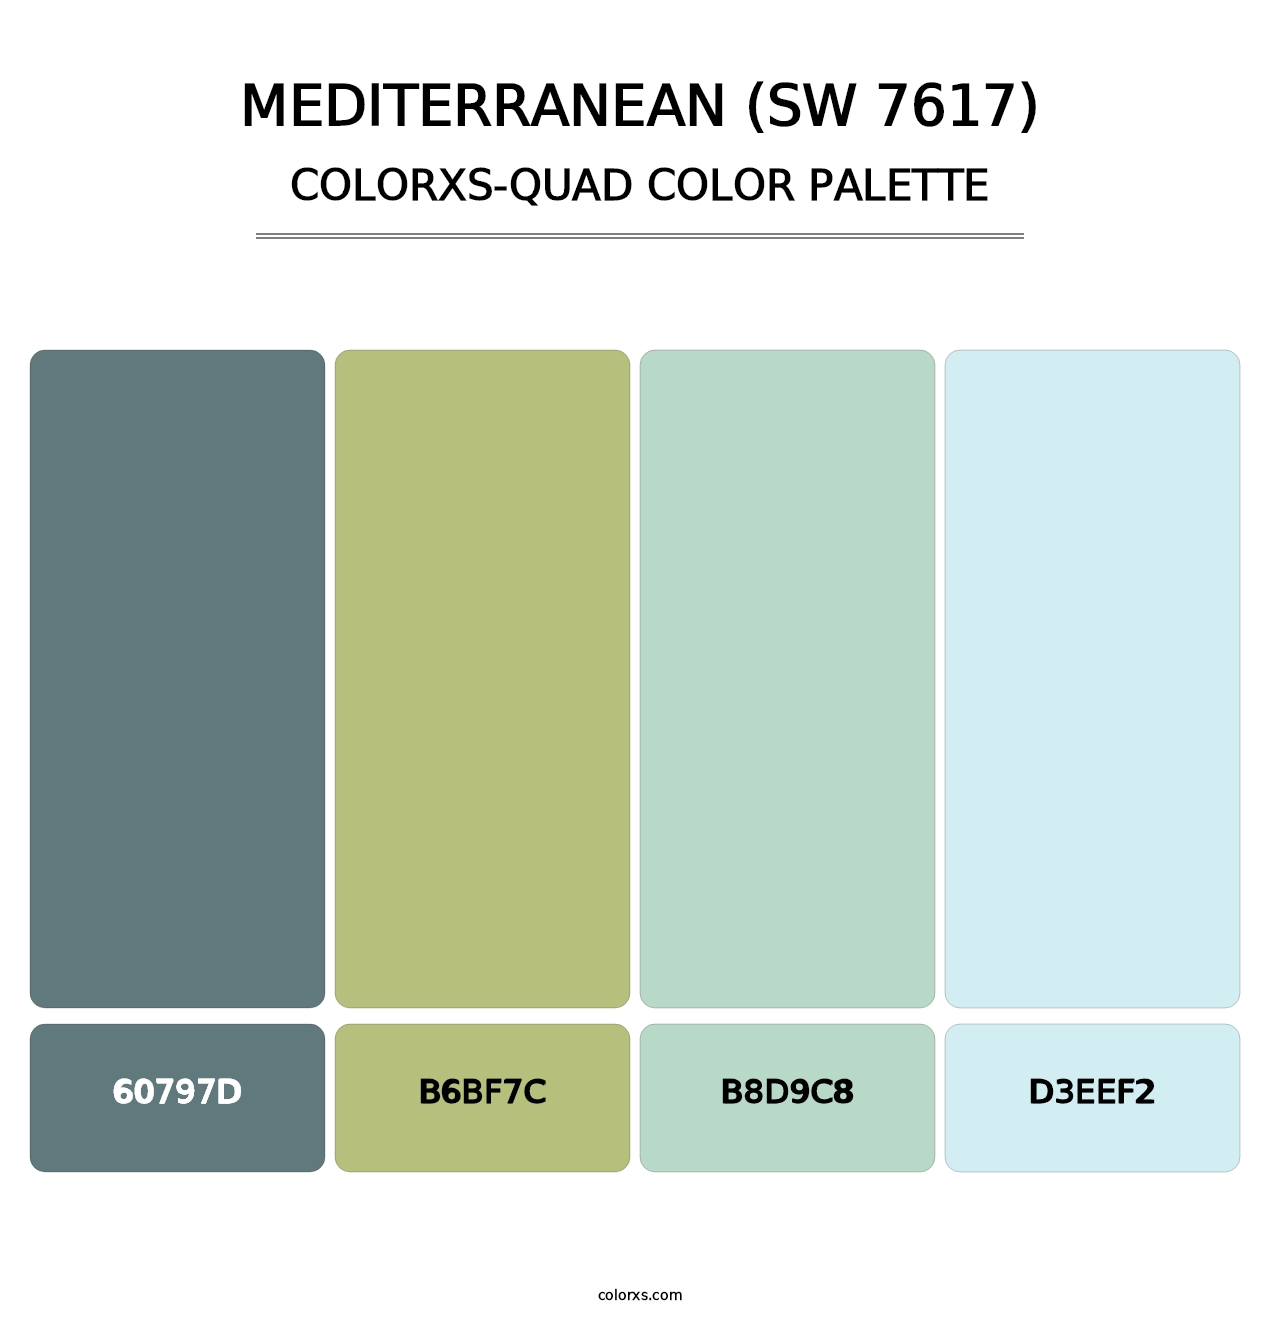 Mediterranean (SW 7617) - Colorxs Quad Palette